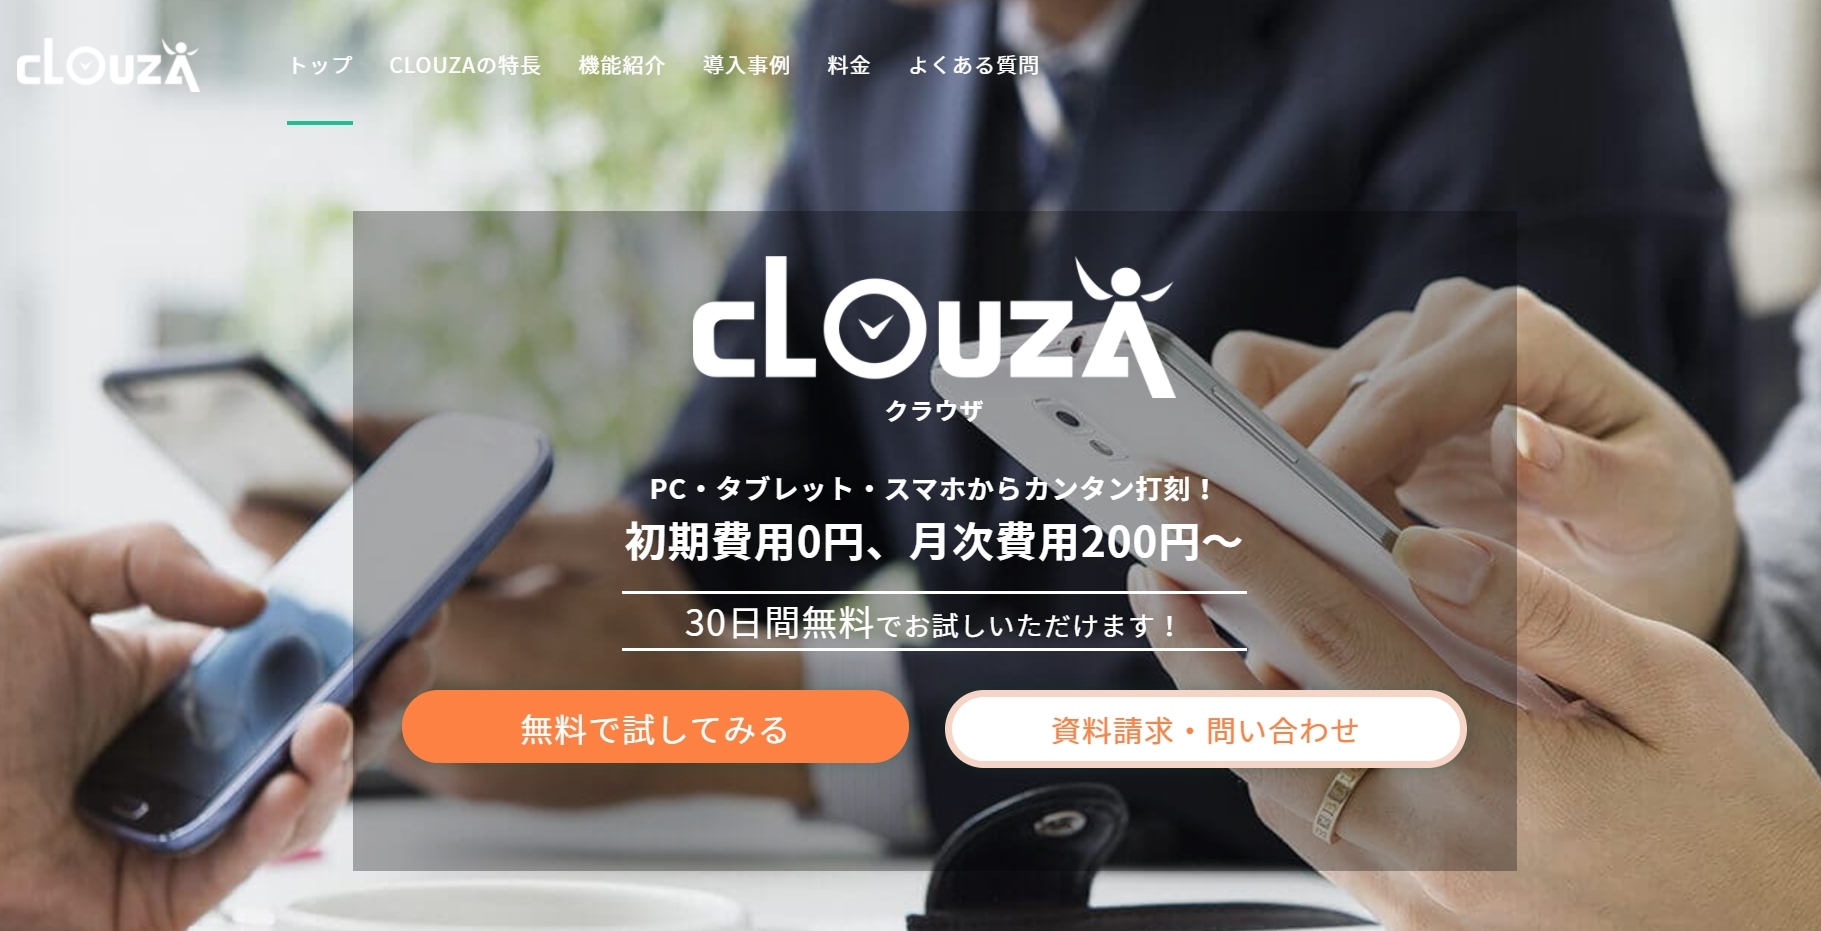 CLOUZA 公式Webサイト